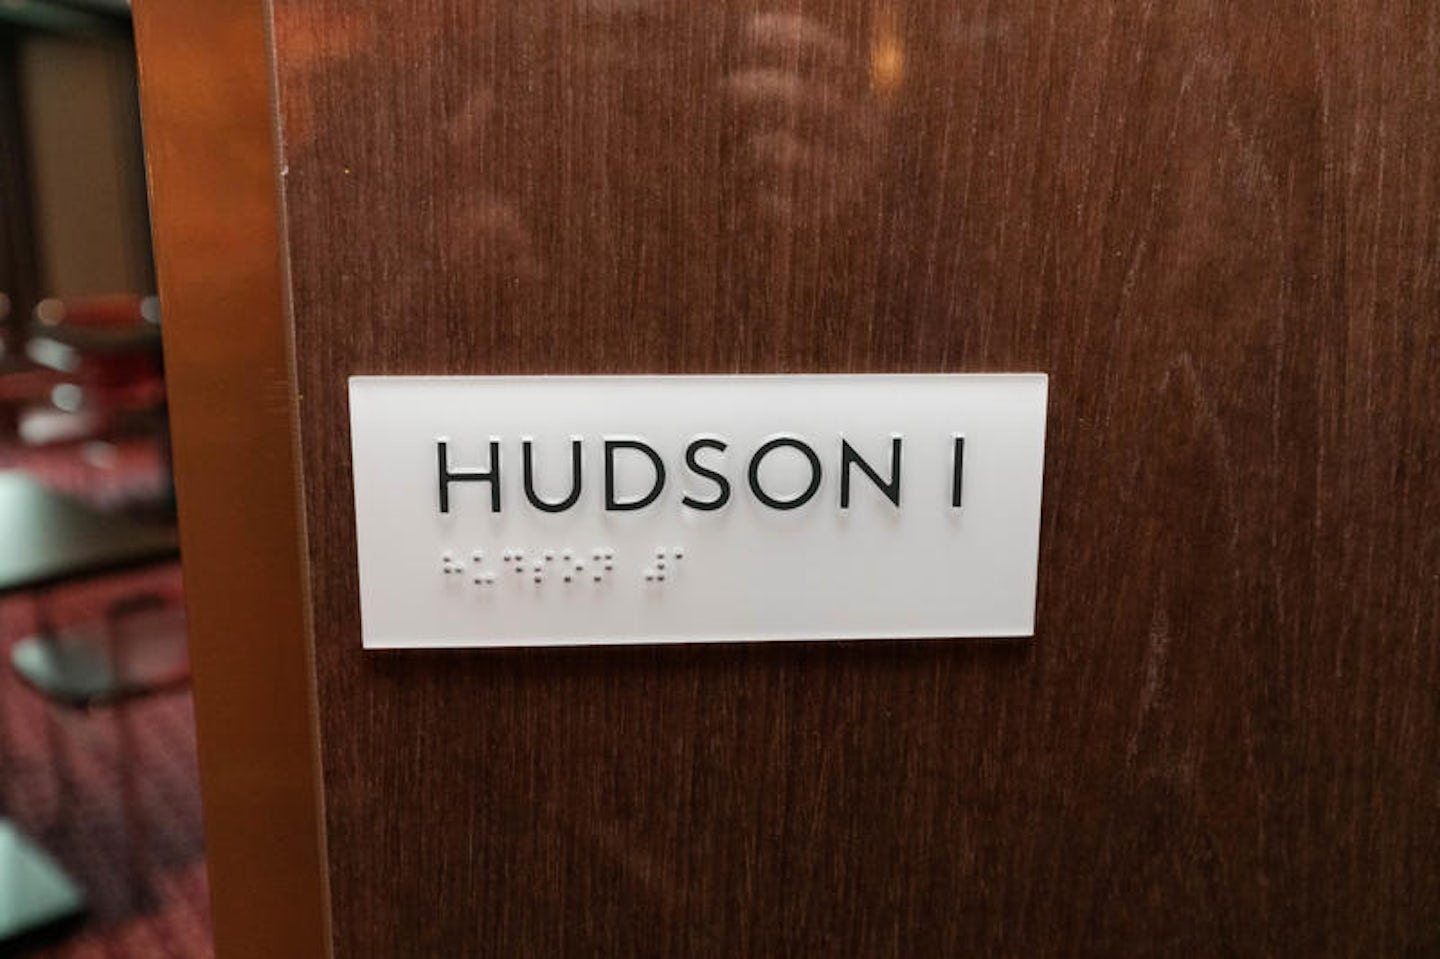 Hudson I on Koningsdam